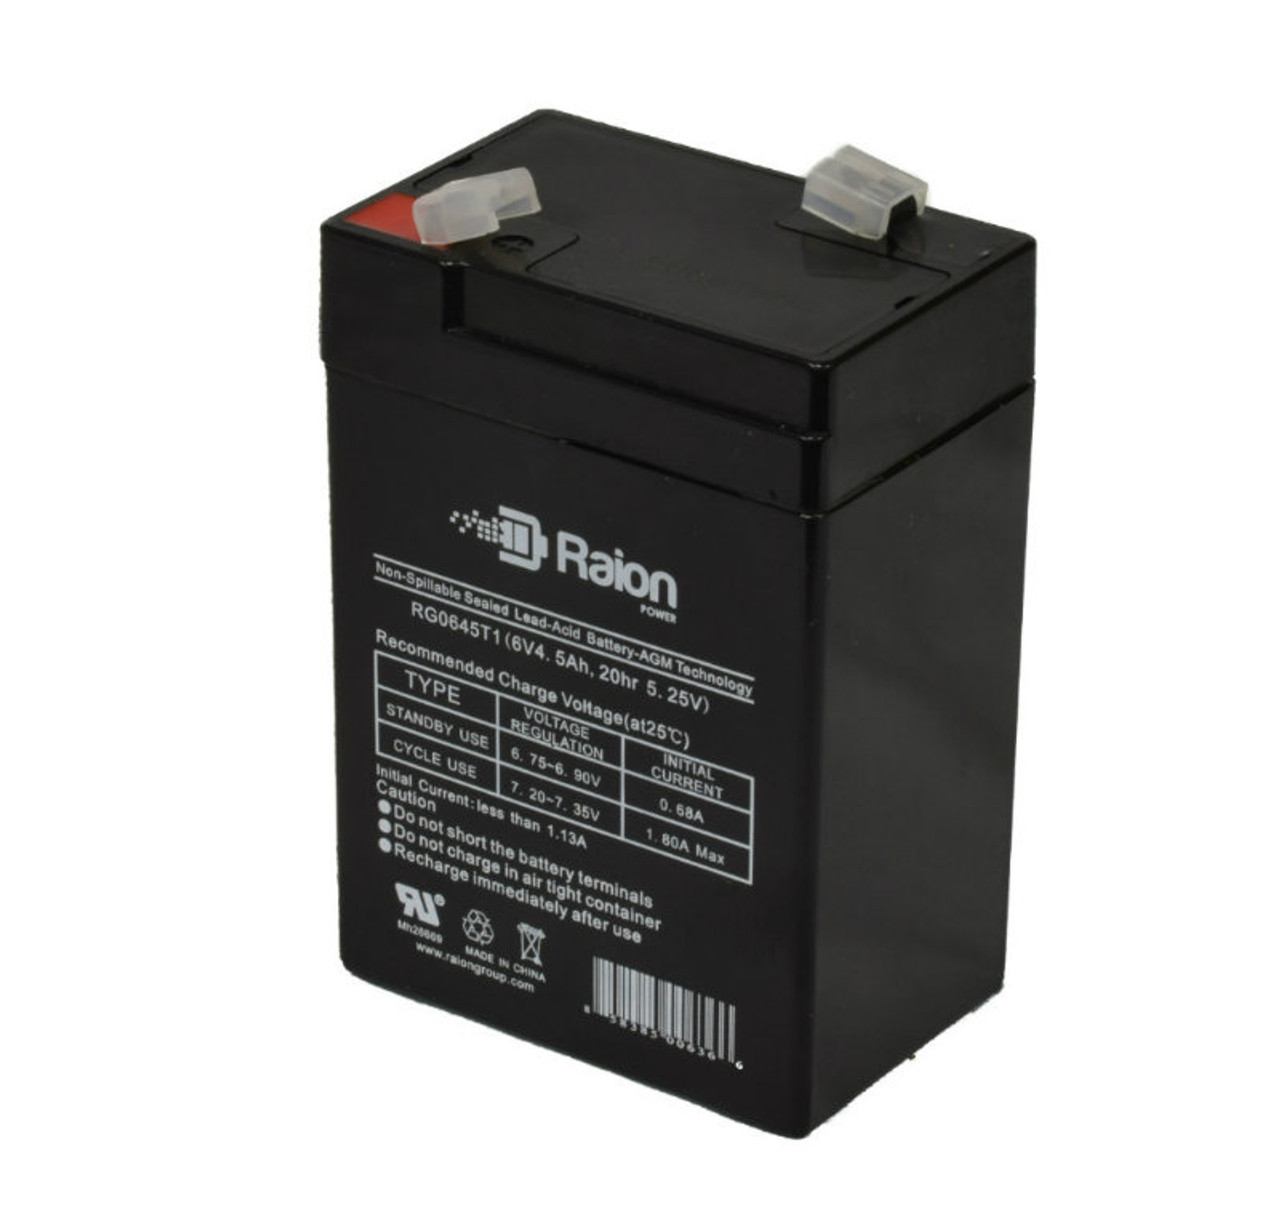 Raion Power RG0645T1 6V 4.5Ah Replacement Battery Cartridge for Wonderlanes 2882 Lil Construction Backhoe